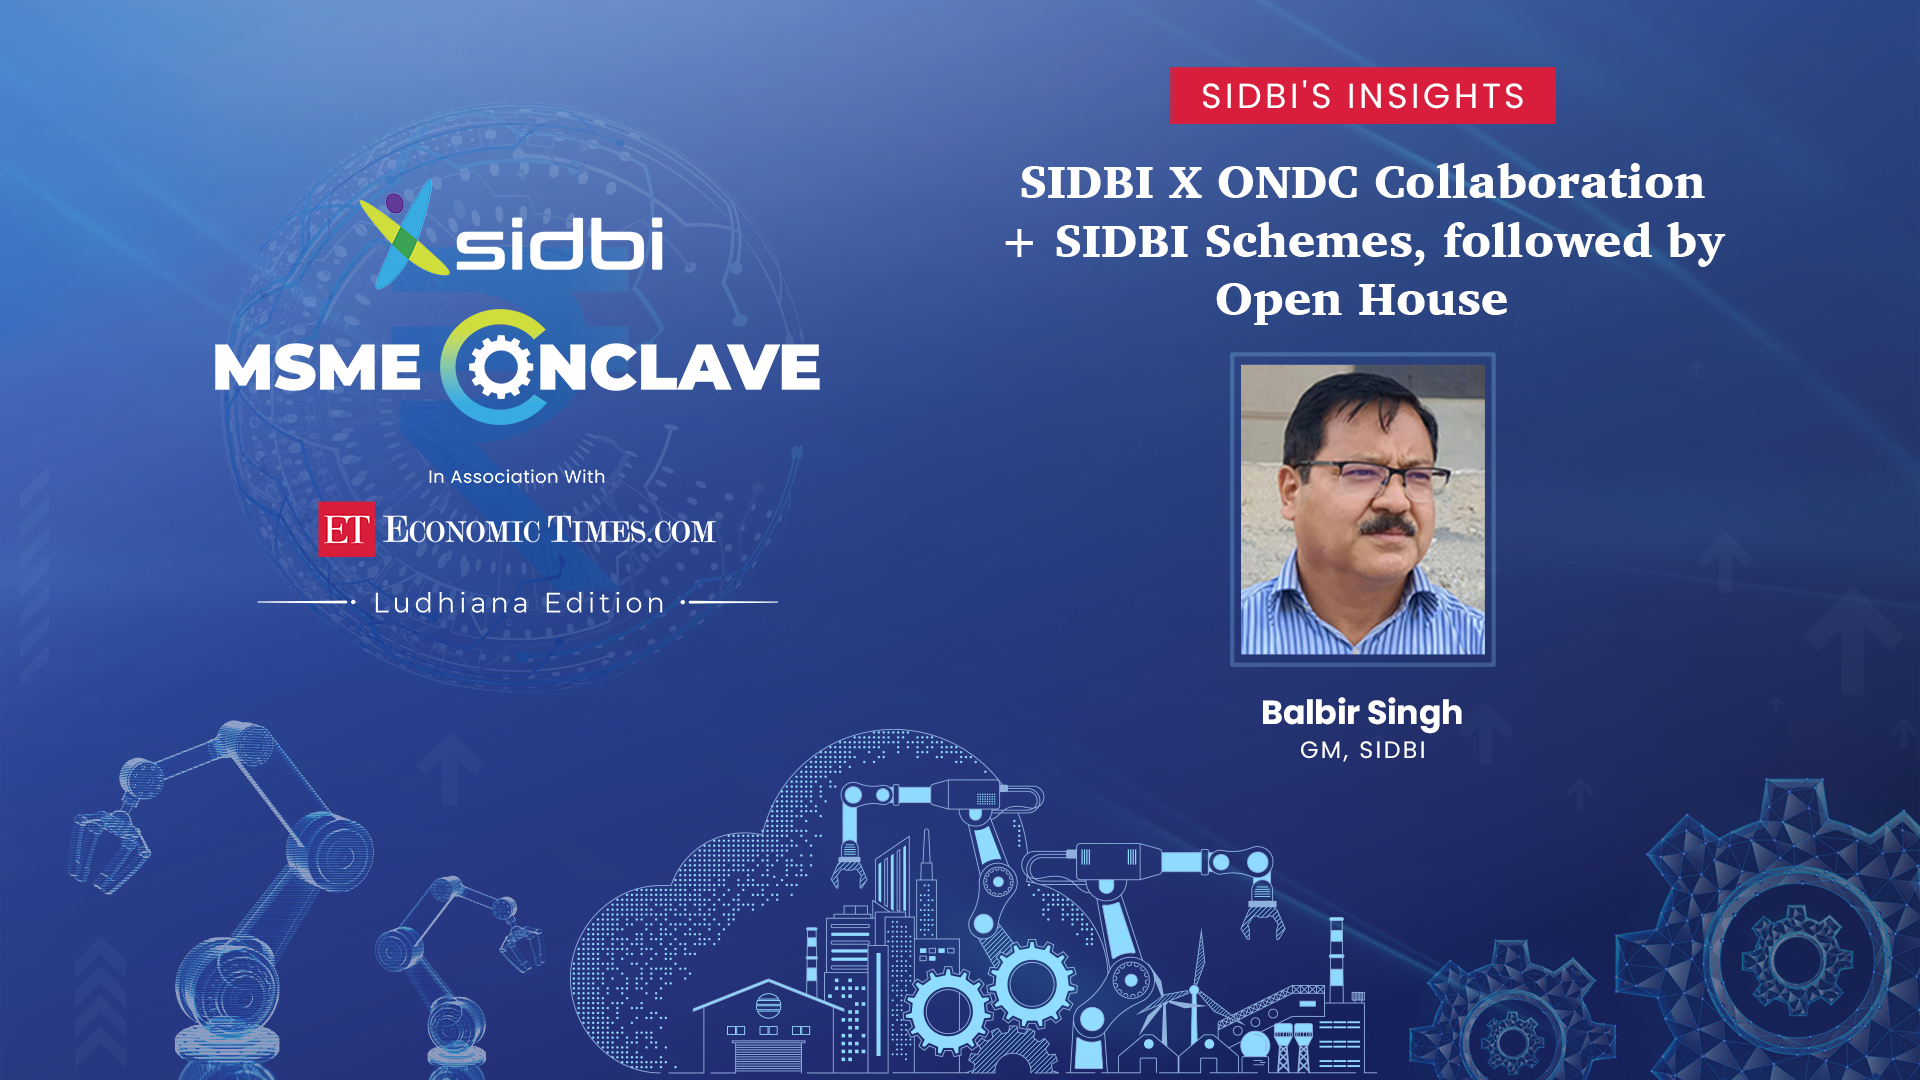 SIDBI MSME Conclave -  SIDBI Schemes, followed by Open House by Balbir Singh, GM SIDBI